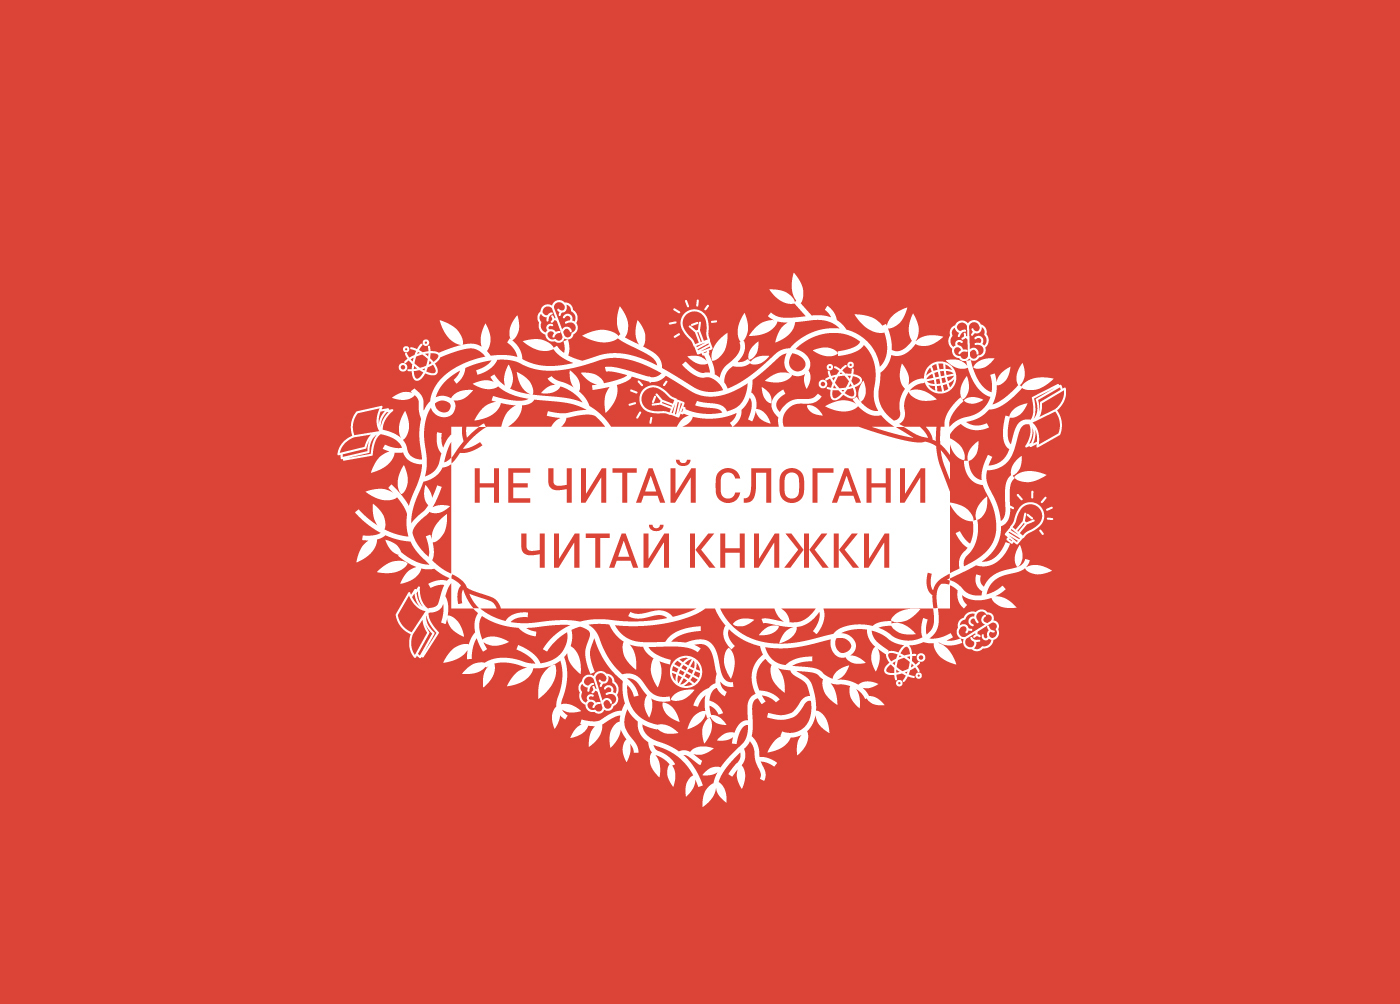 ukraine nashformat tshirt floral certificate book publishing  